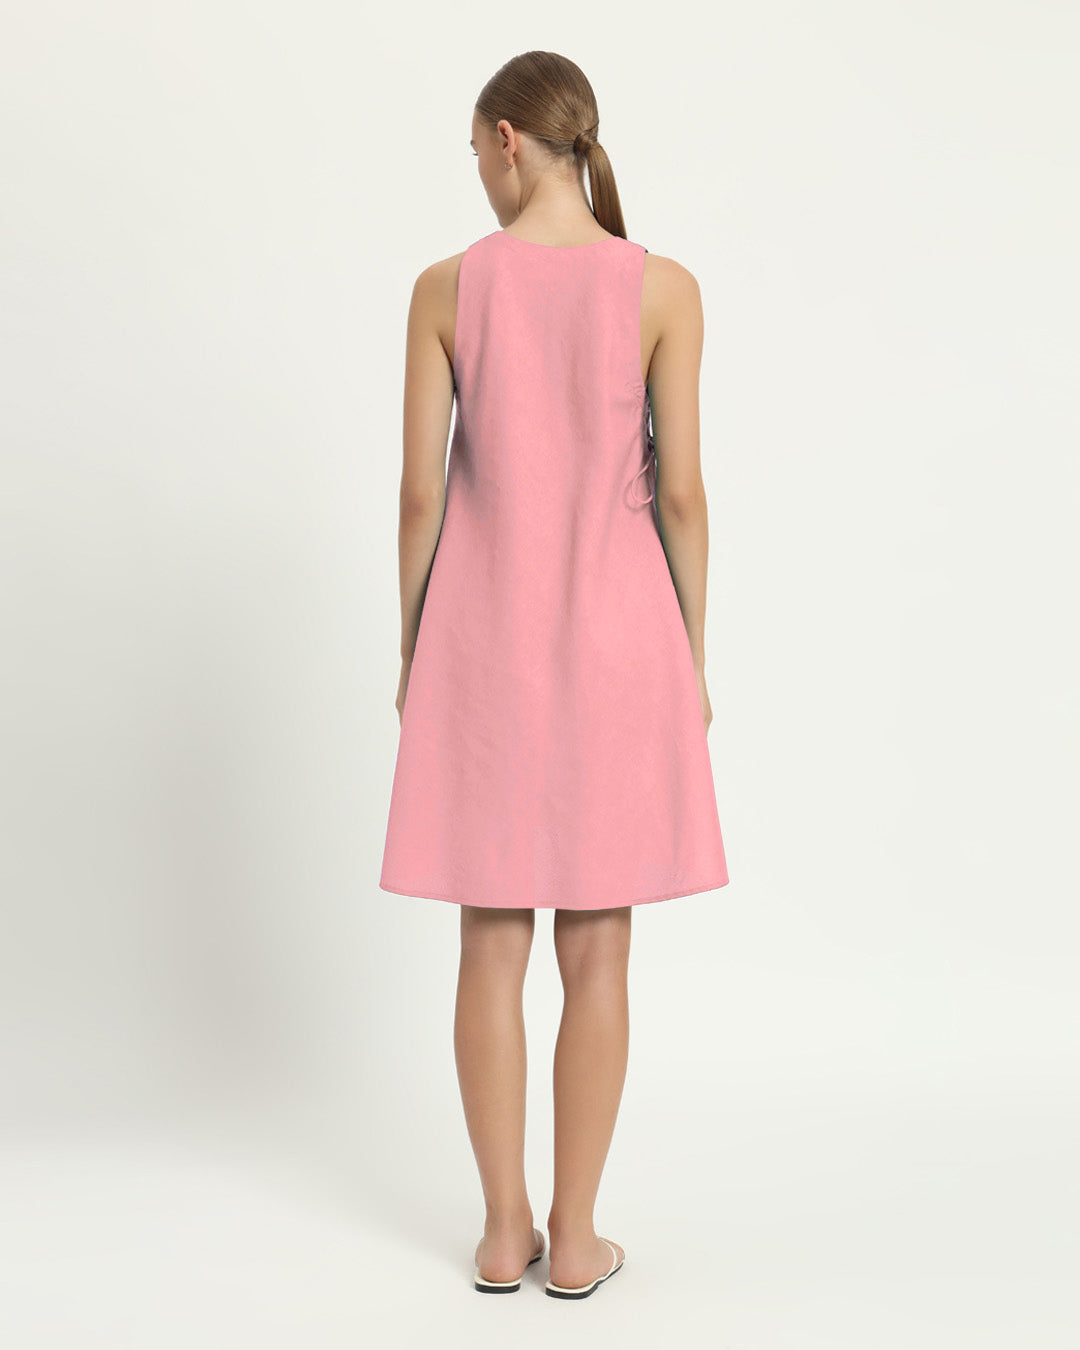 The Rhede Fondant Pink Cotton Dress